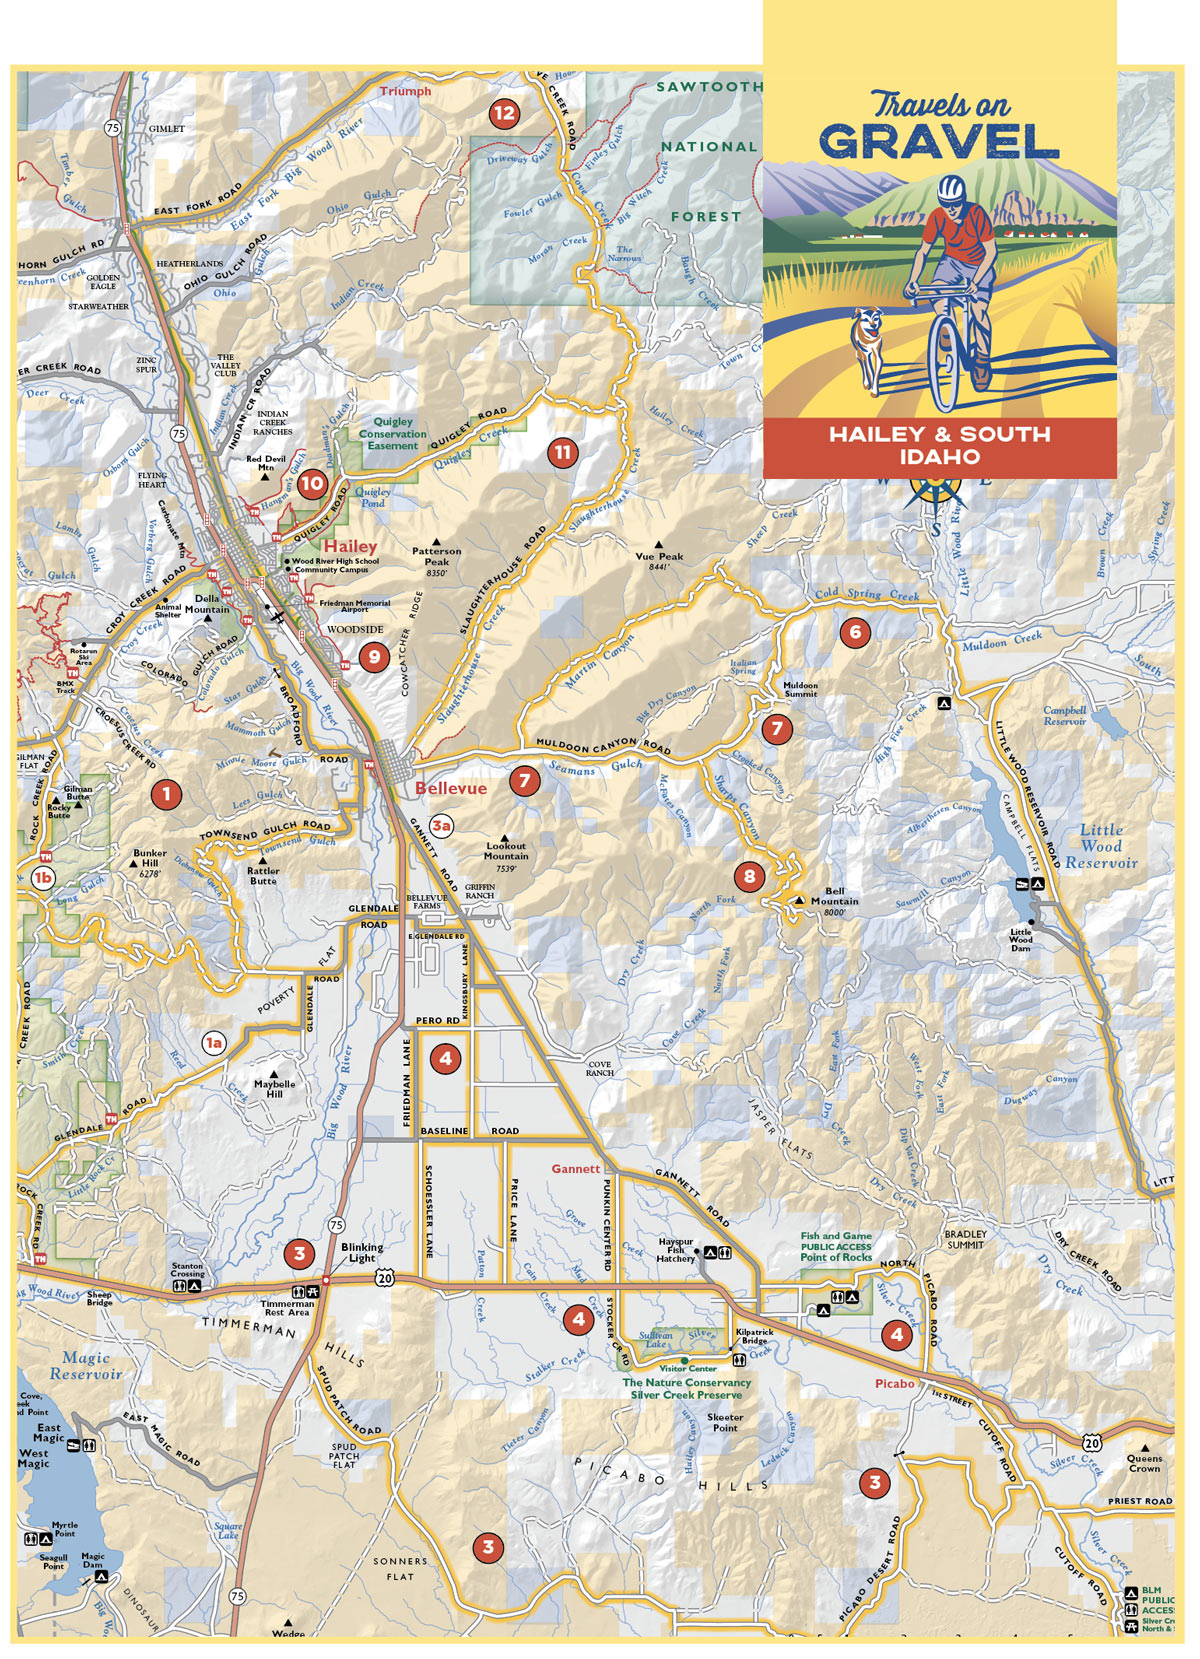 Travels on Gravel in Idaho - Idaho gravel bike map